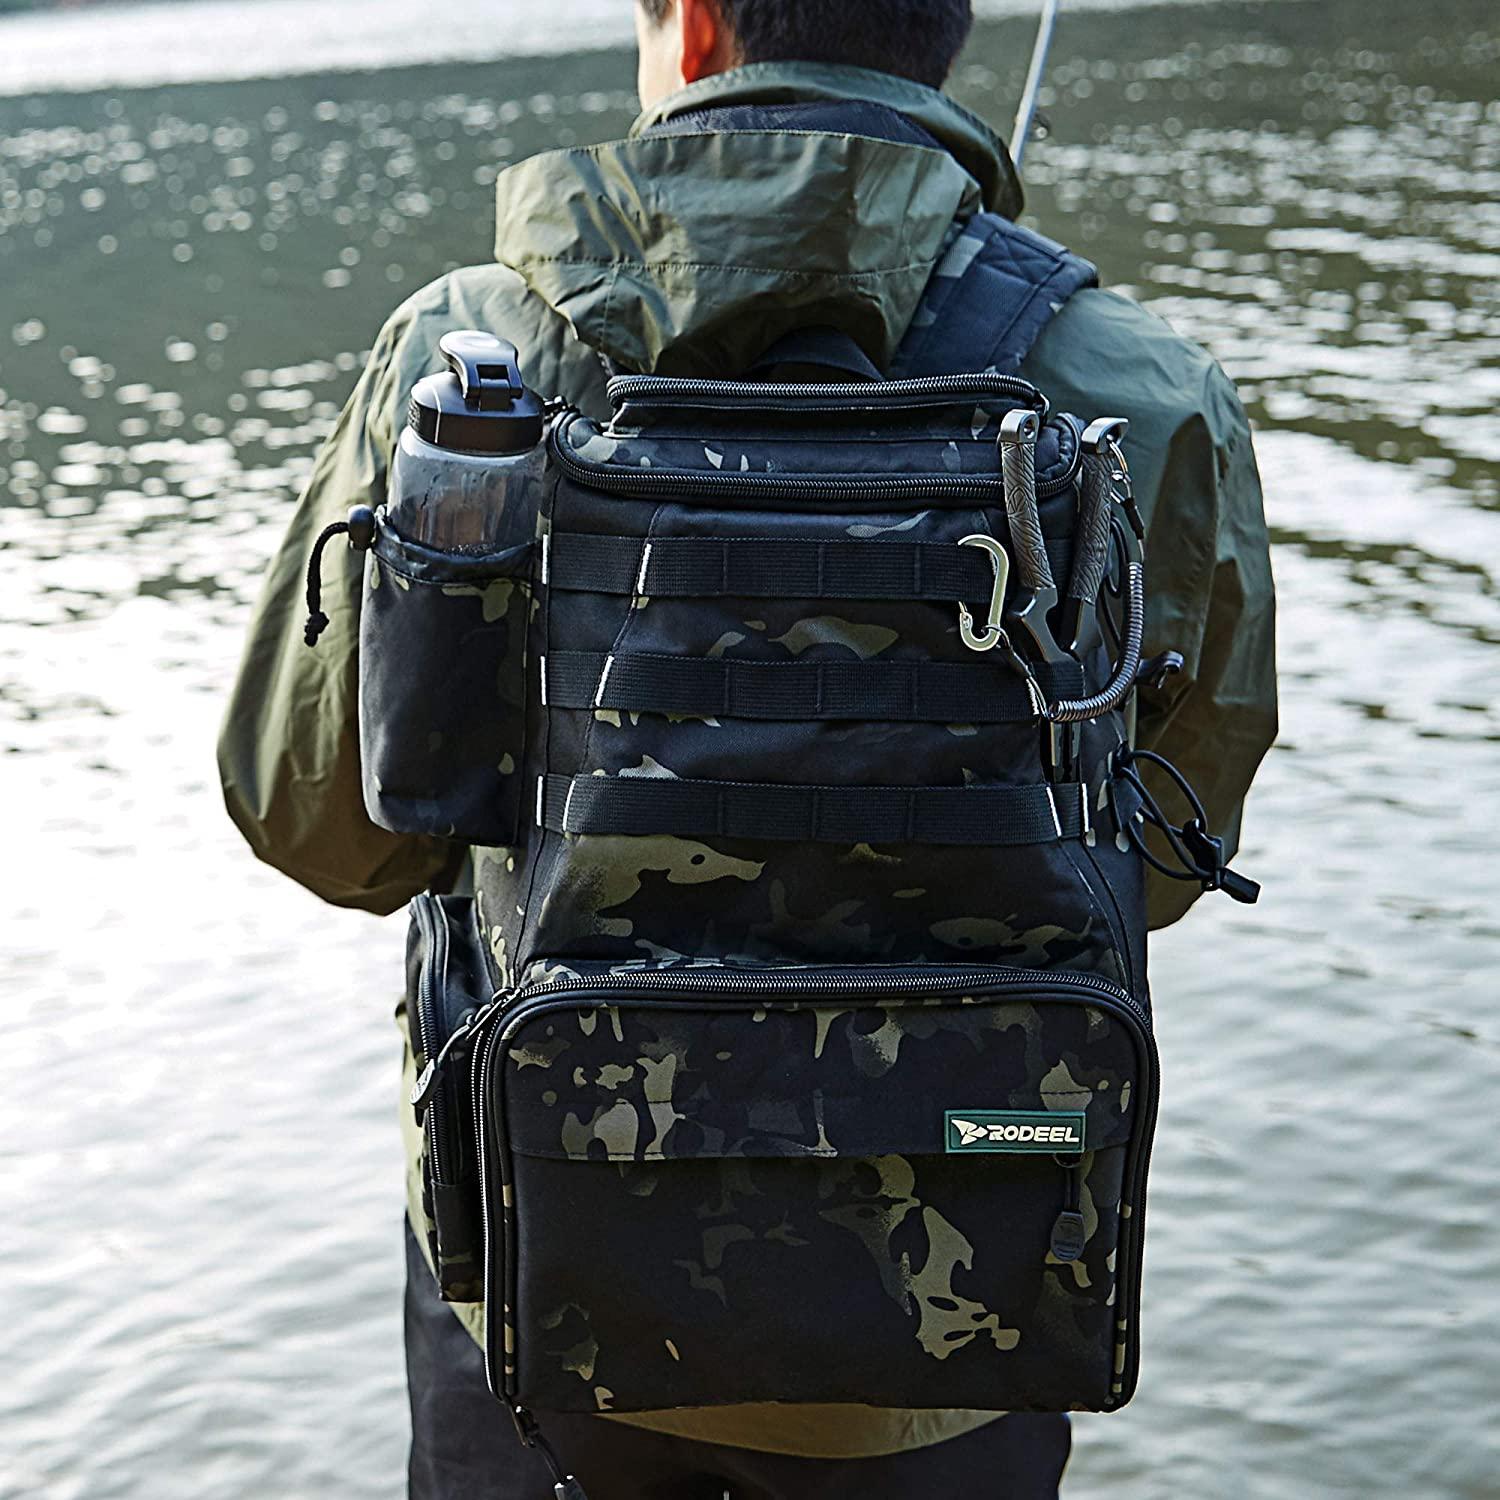 BirdinBag – Rodeel Fishing Tackle Backpack: 2 Rod Holders, 4